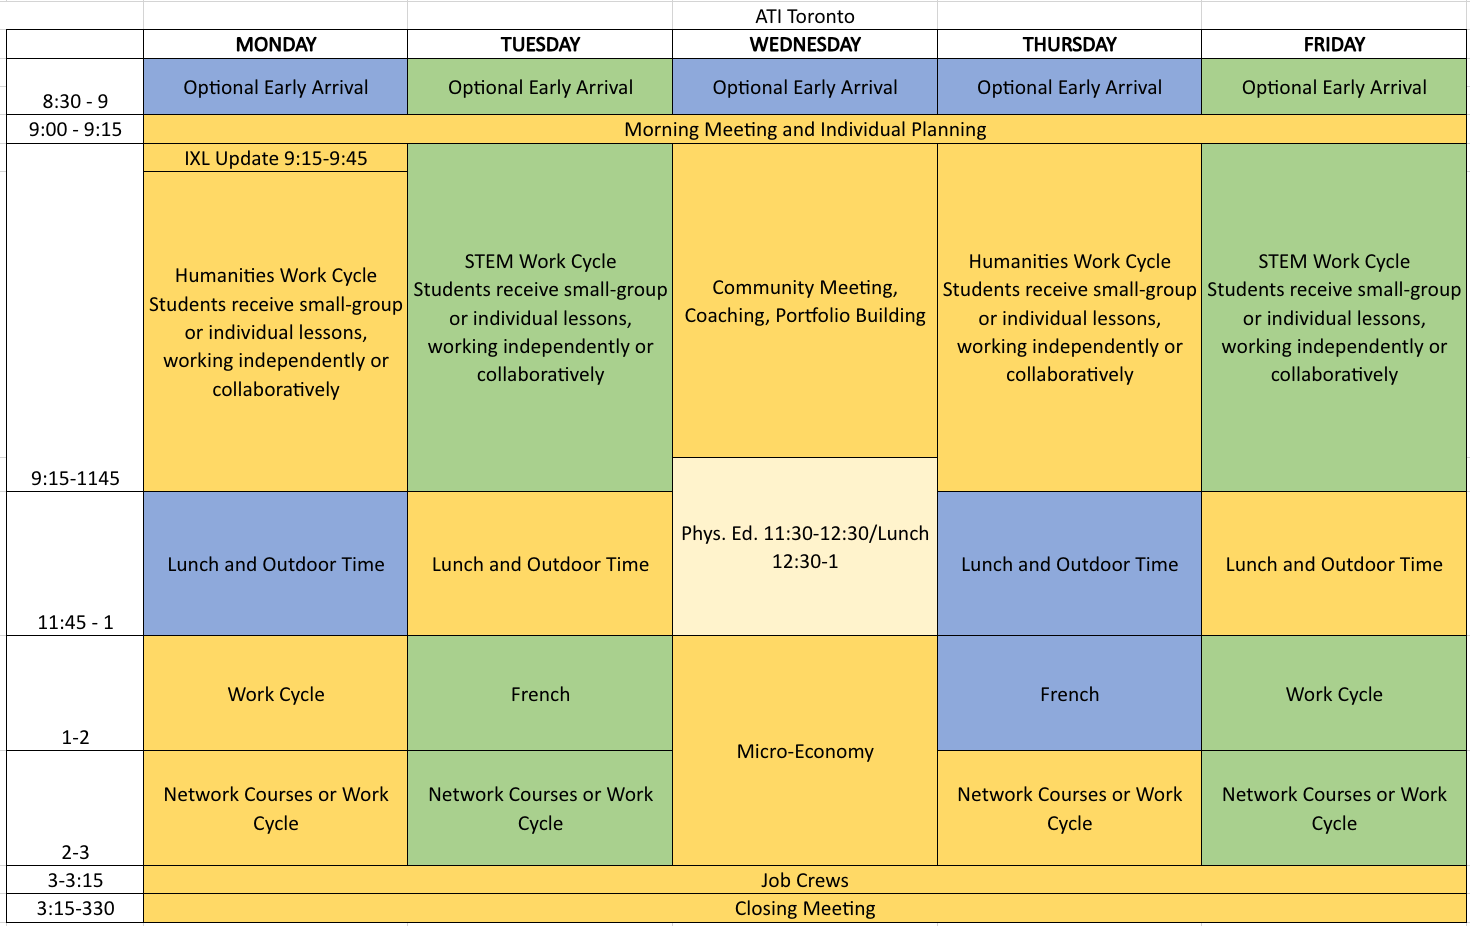 Sample ATI Toronto Middle School Schedule